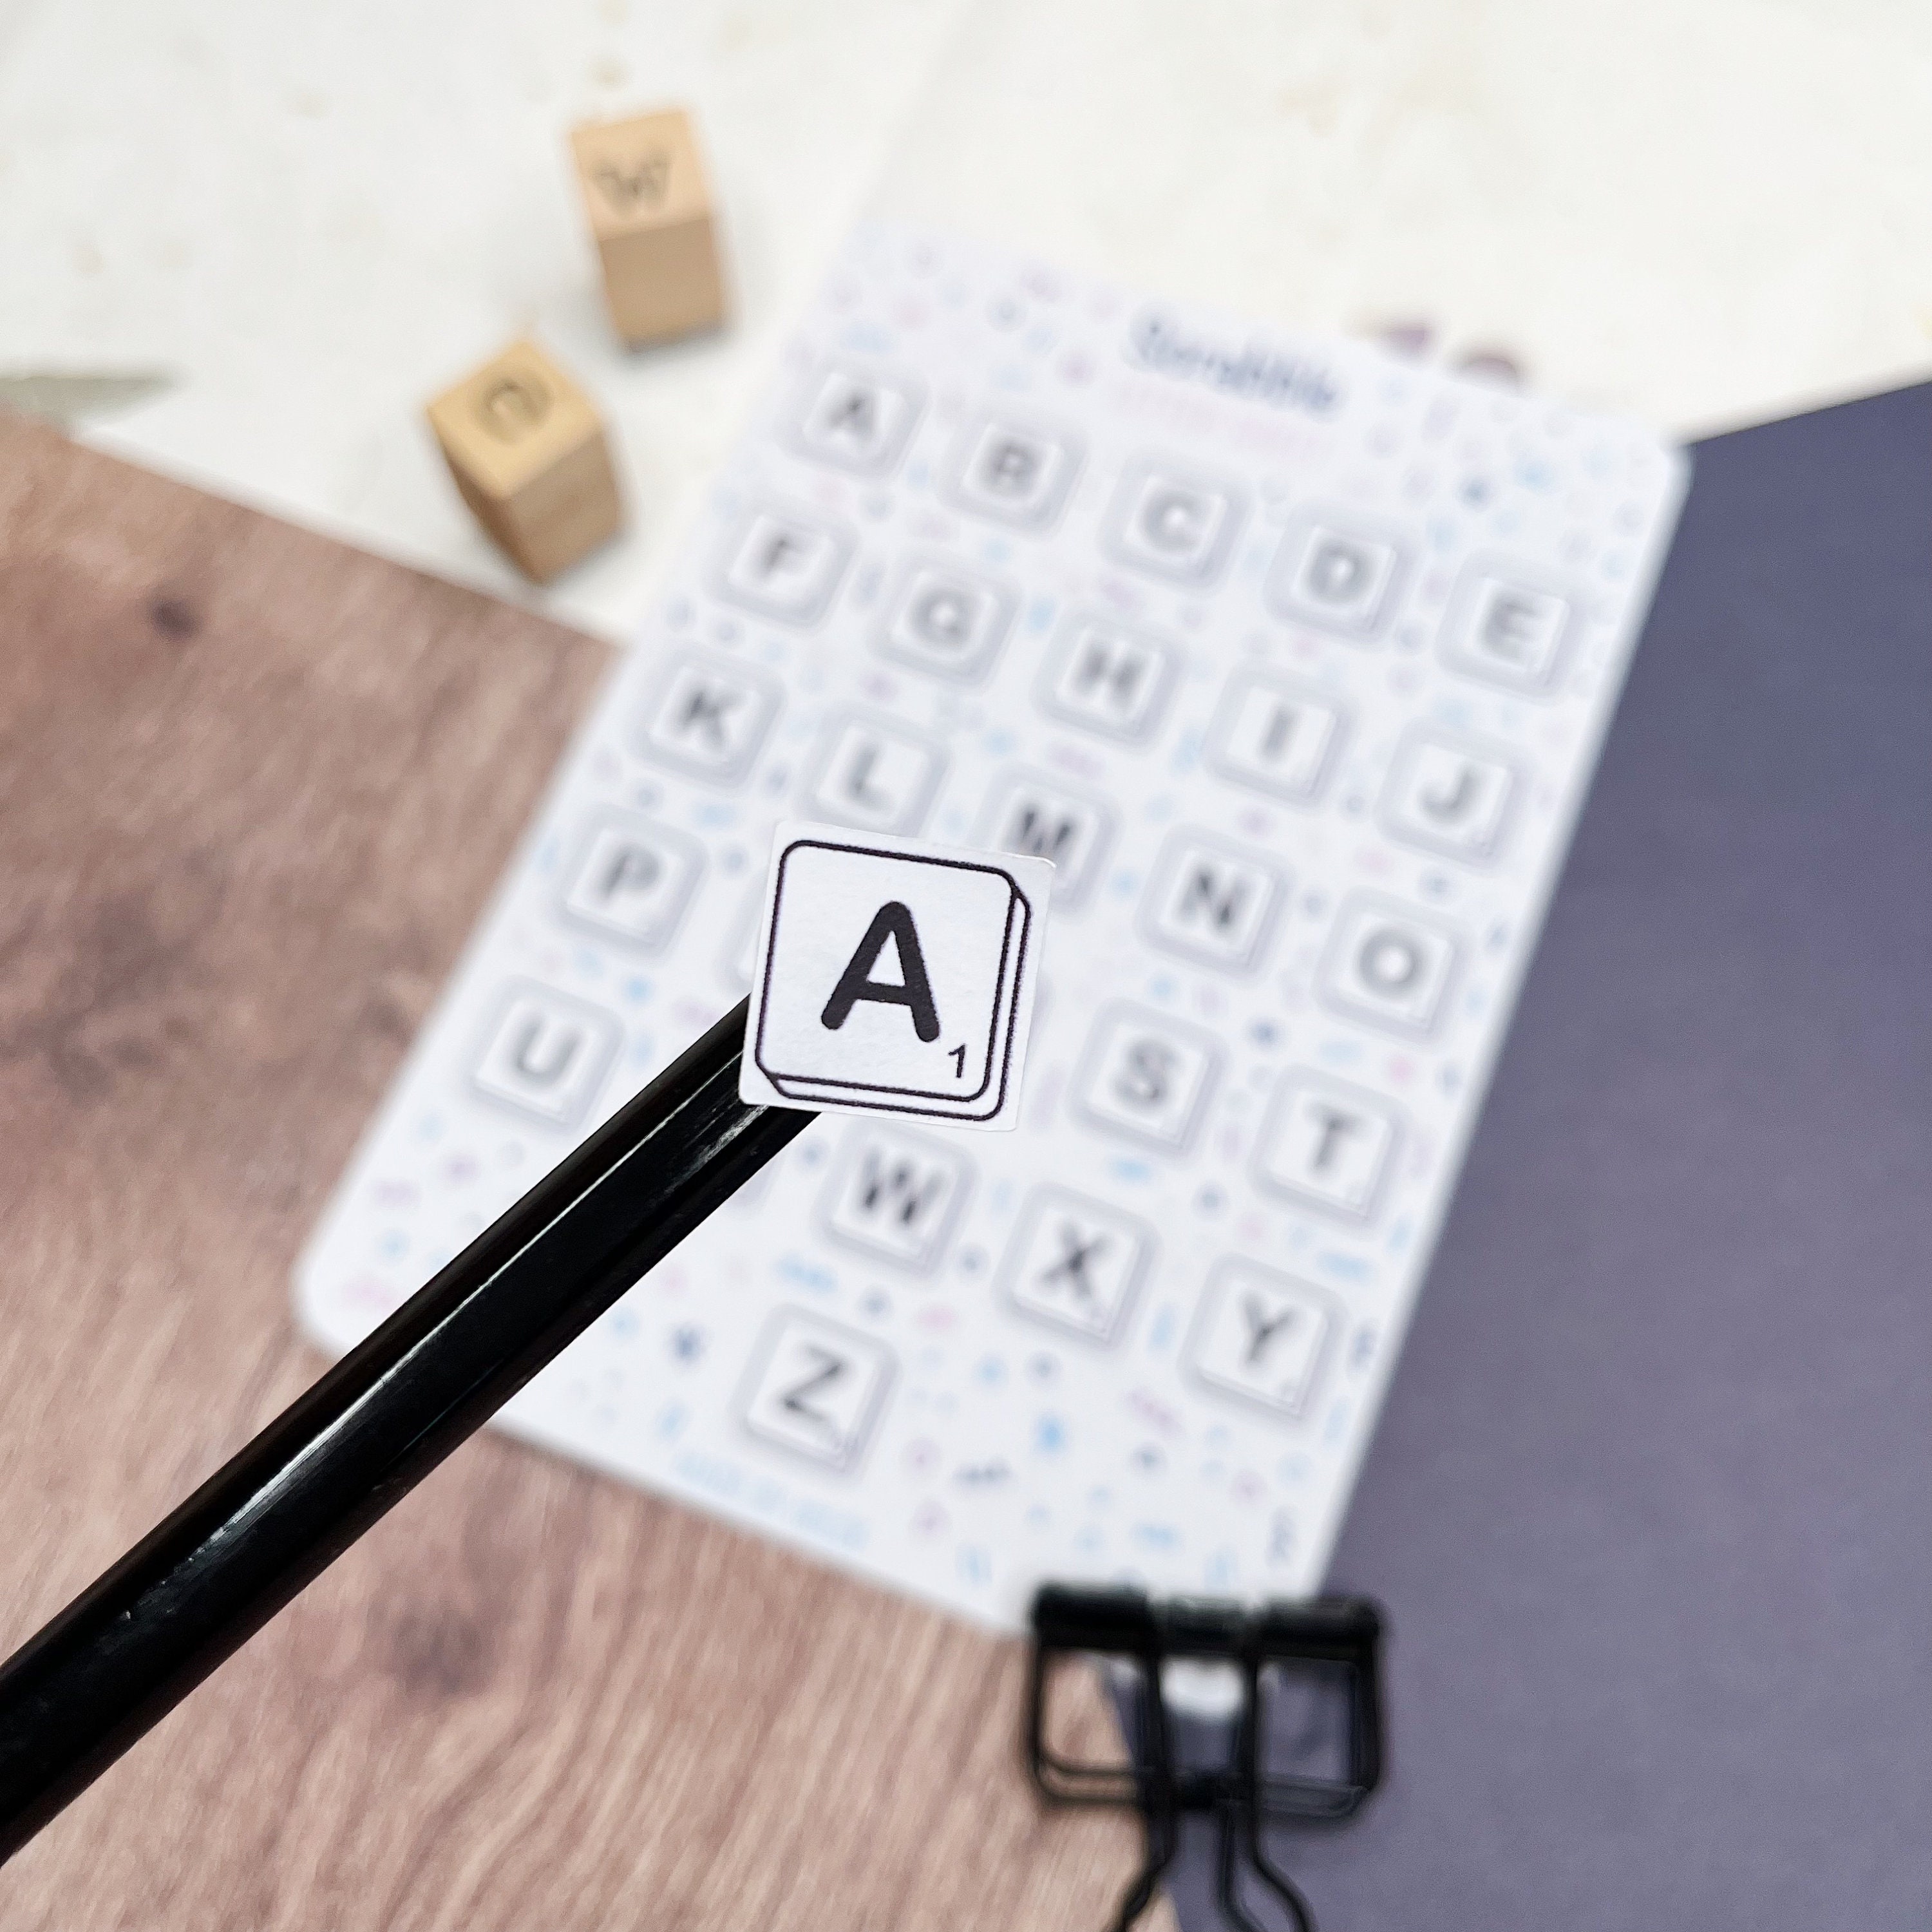 Letter Sheet Scrabble Style big, Sticker Sheet, Alphabet, Writing